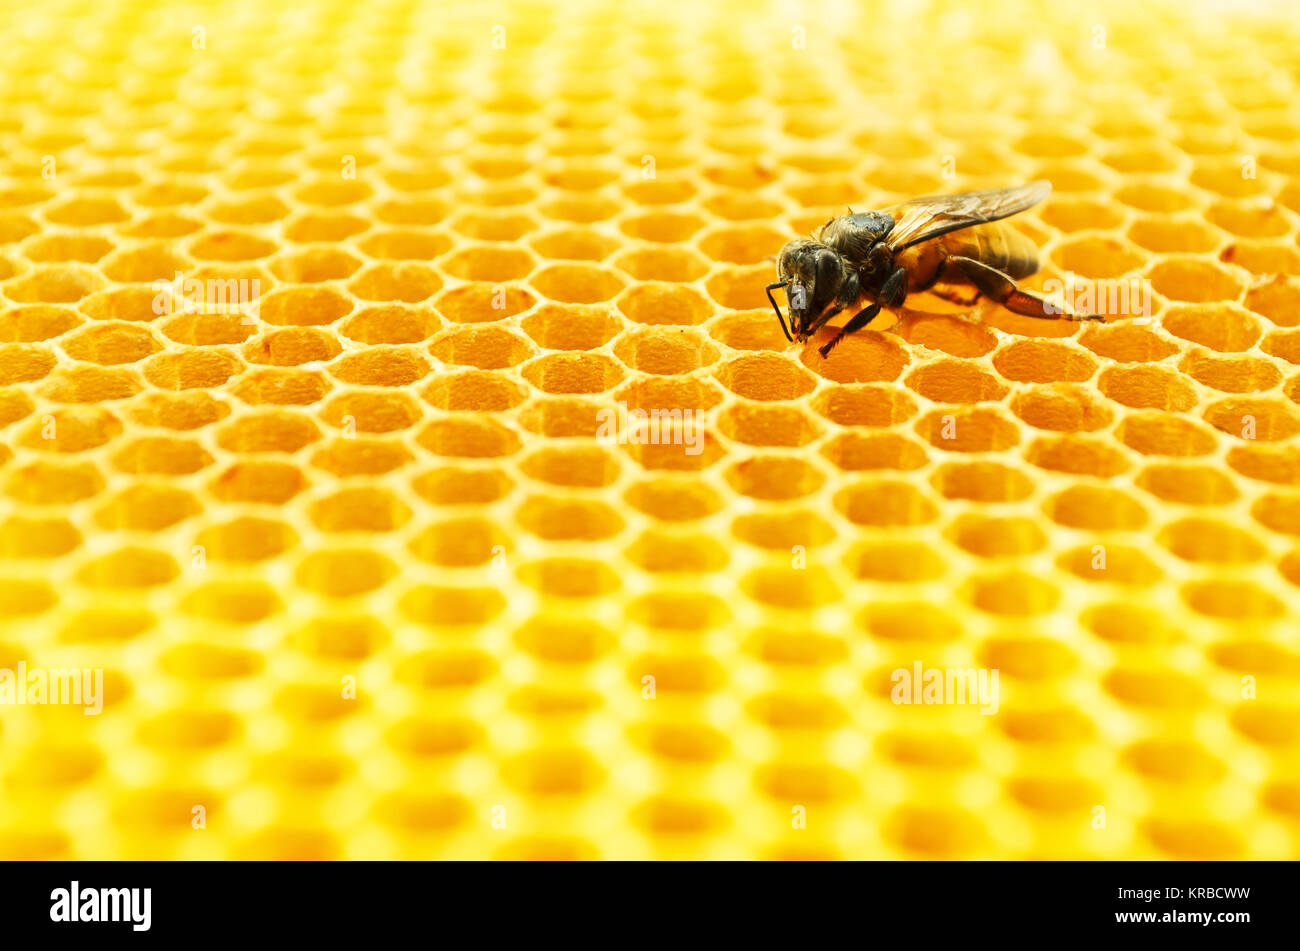 Bees honey cells Stock Photo